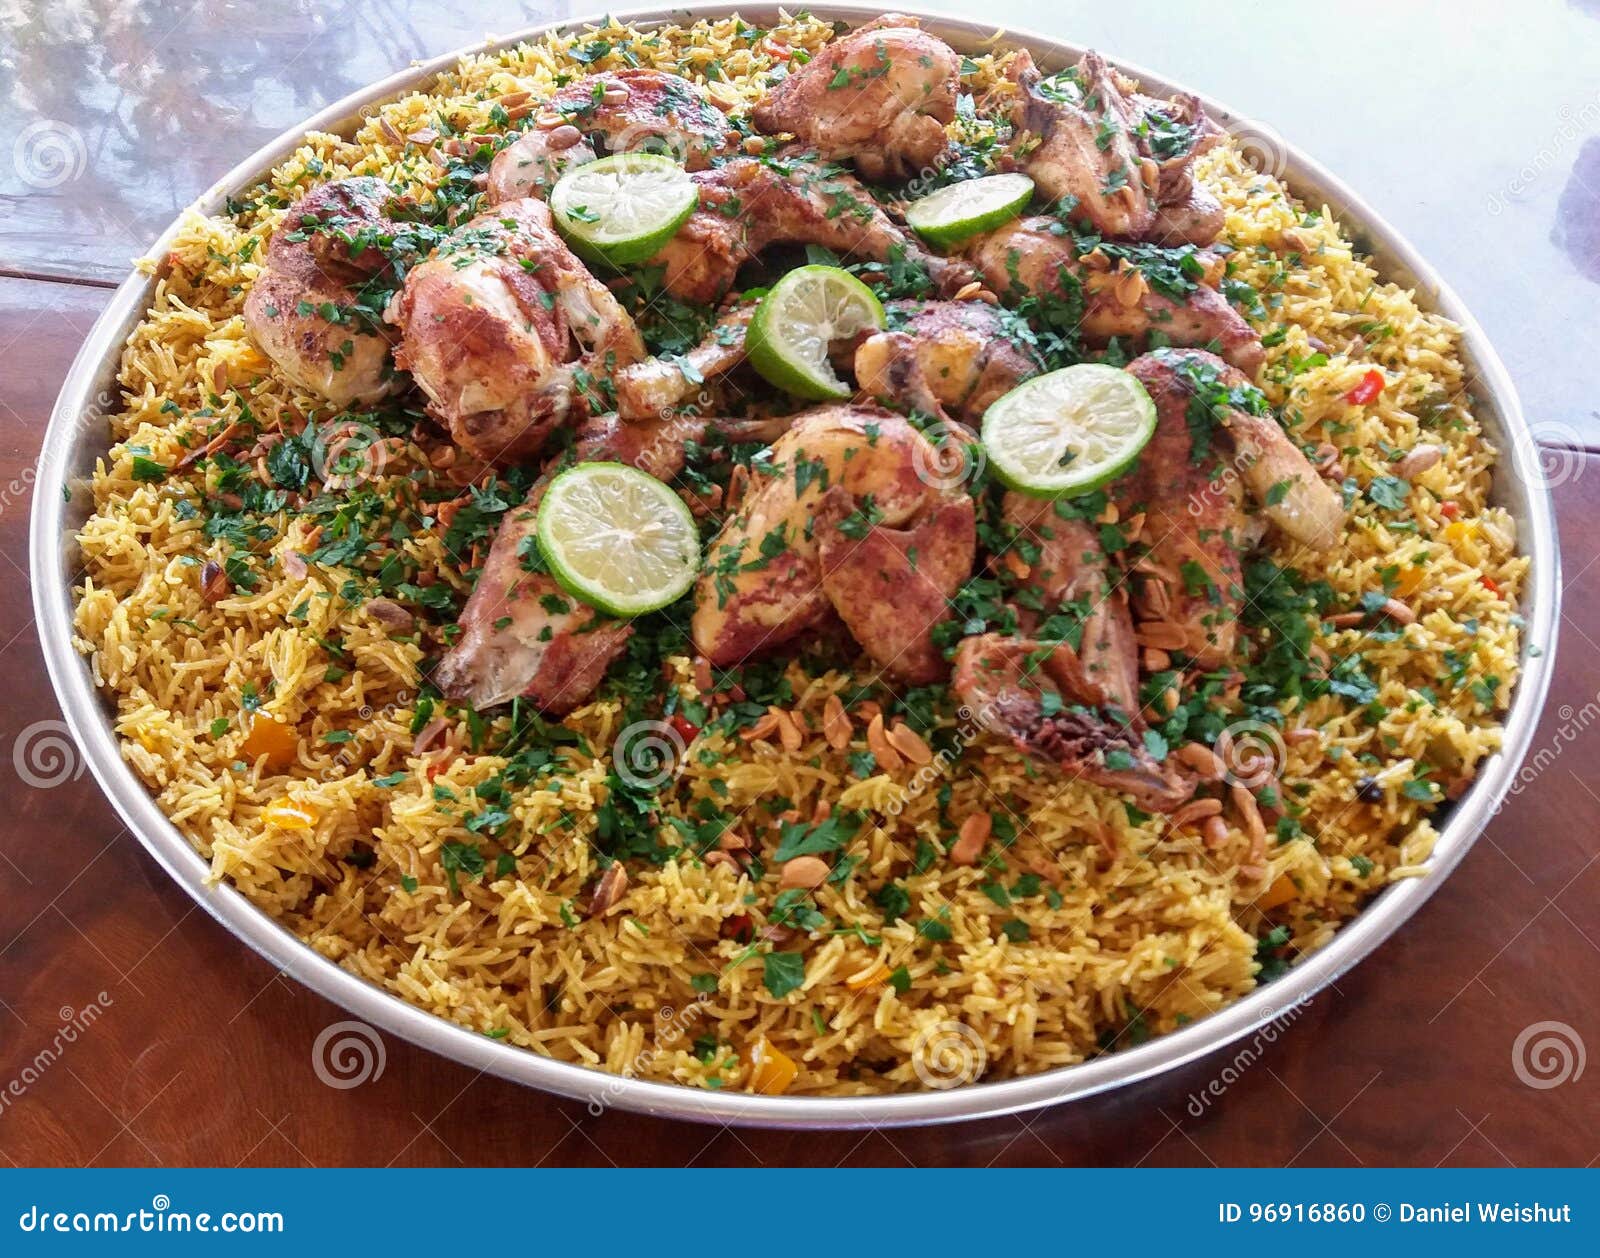 Palestinian Chicken And Rice Dish Stock Photo Image Of Chicken Lemon 96916860